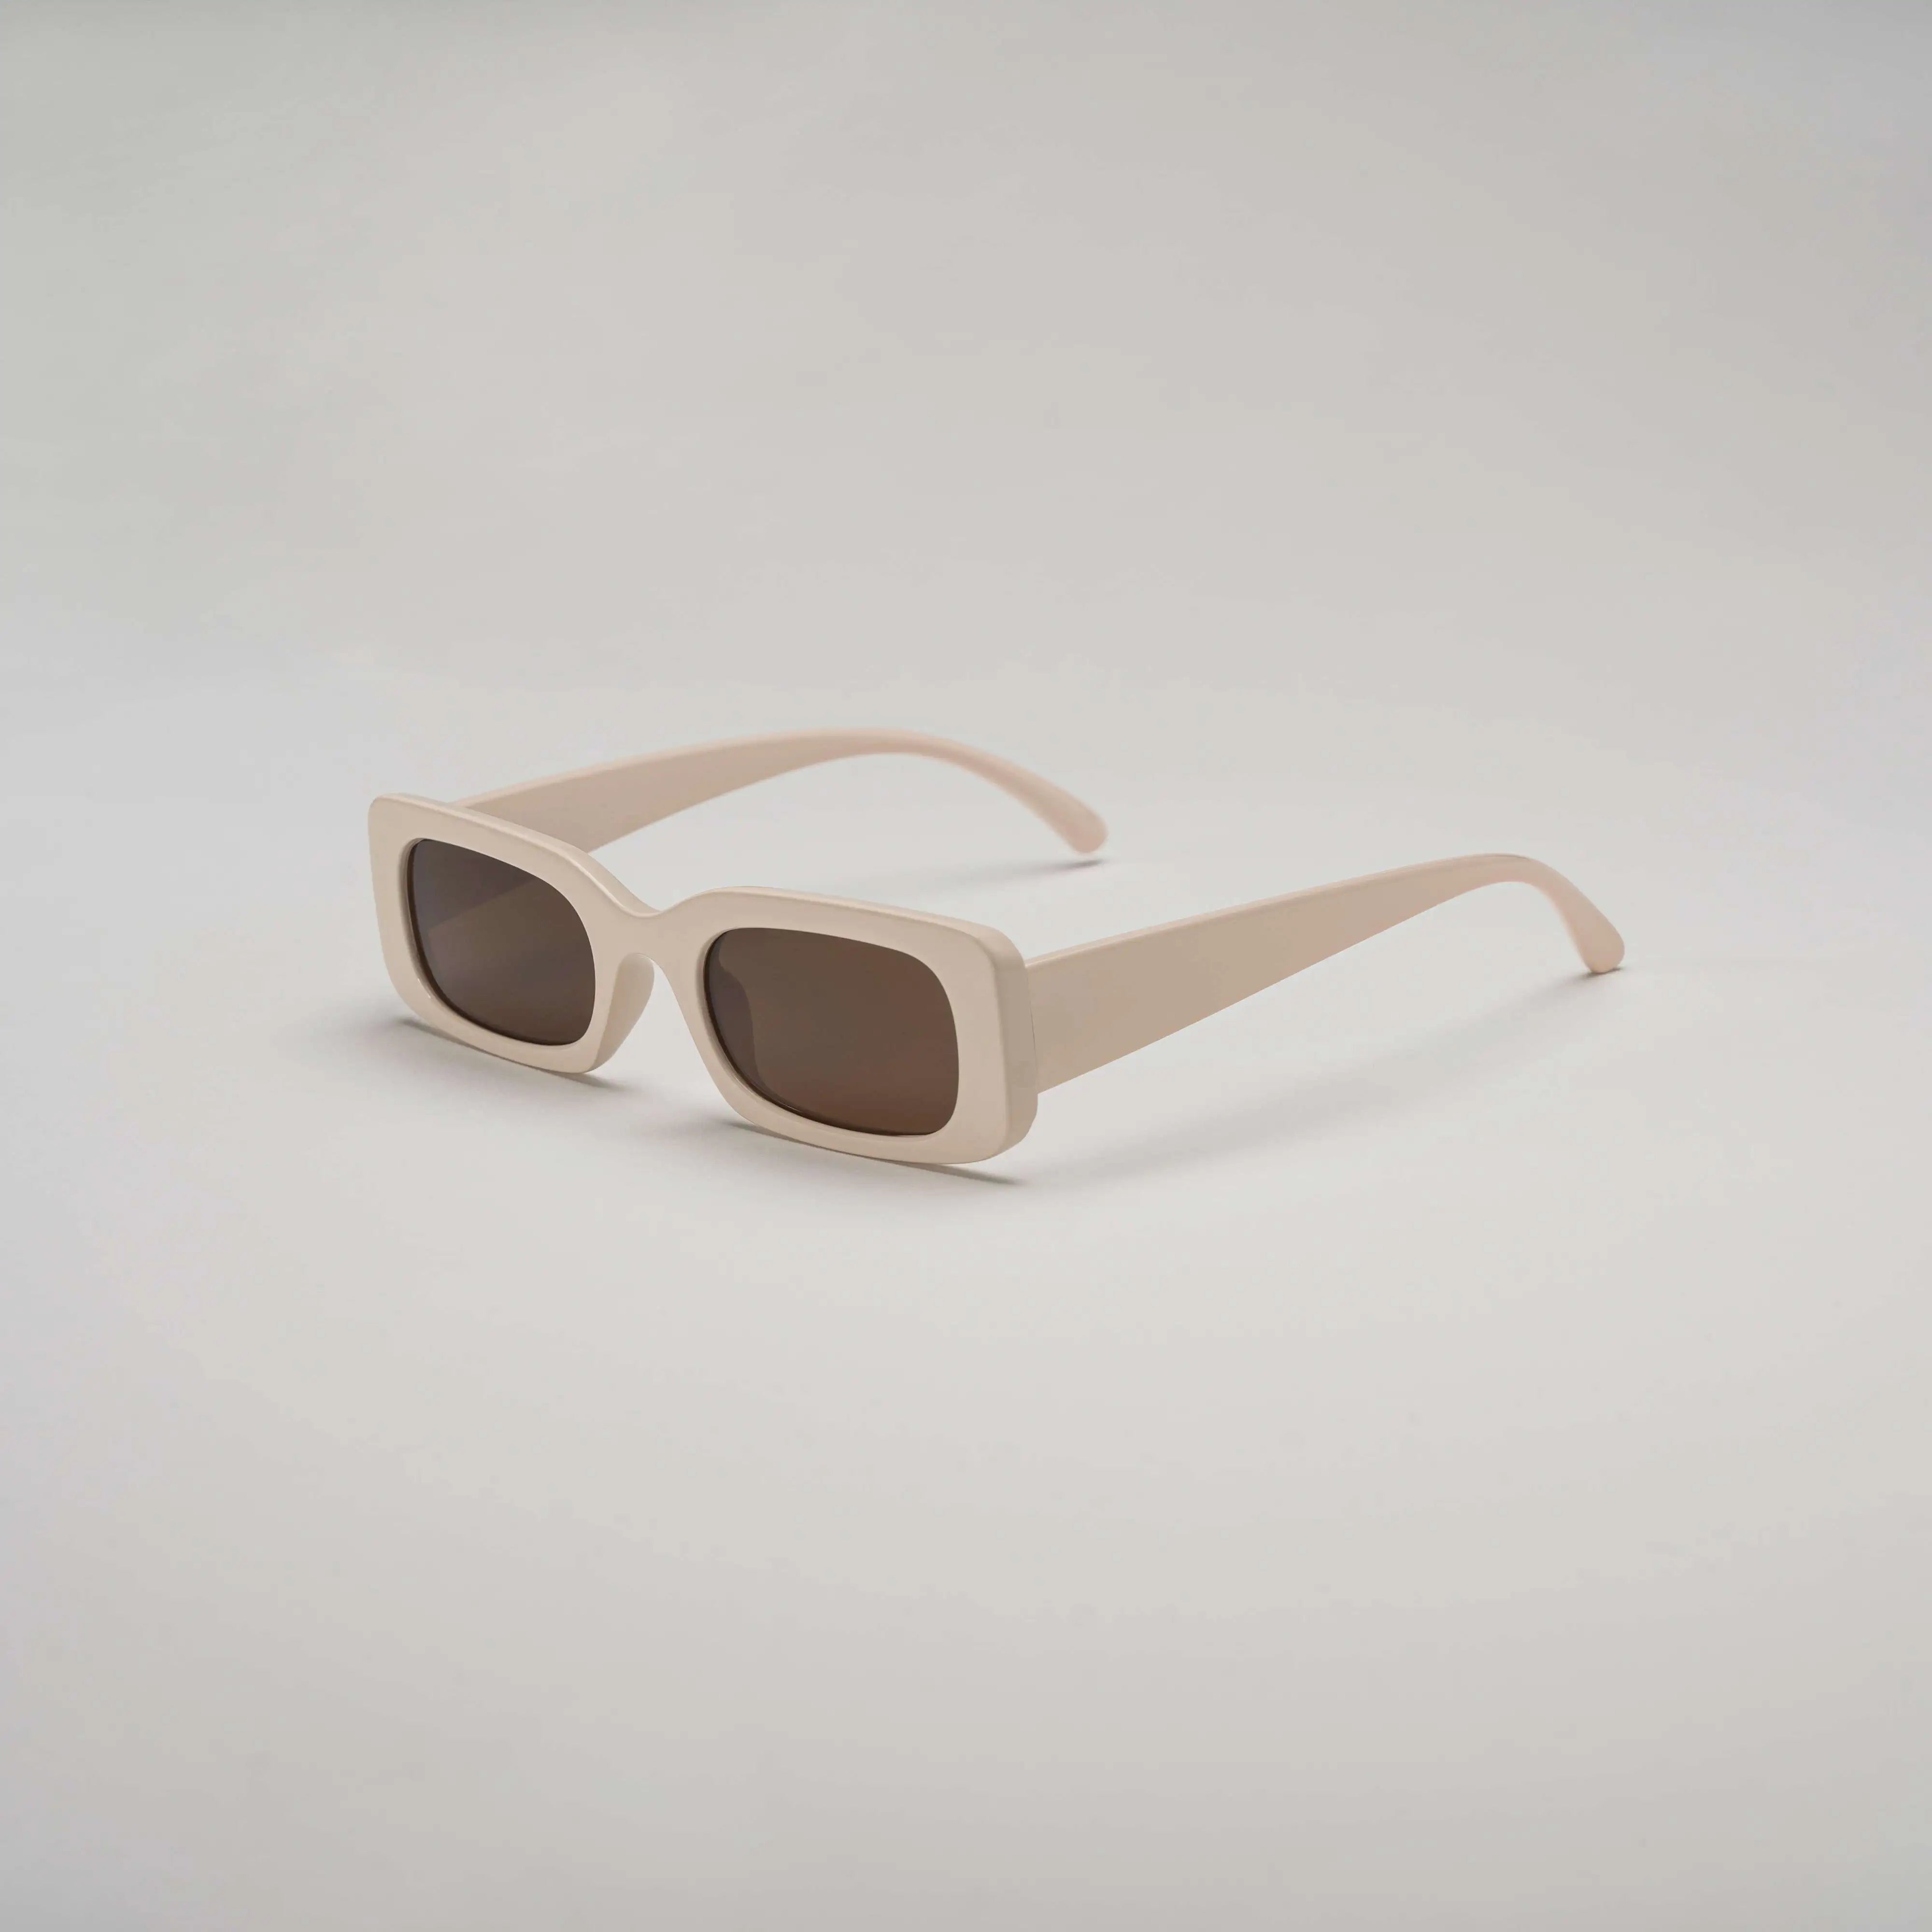 'Sophia Violets' Retro Oval Sunglasses in Beige & Brown